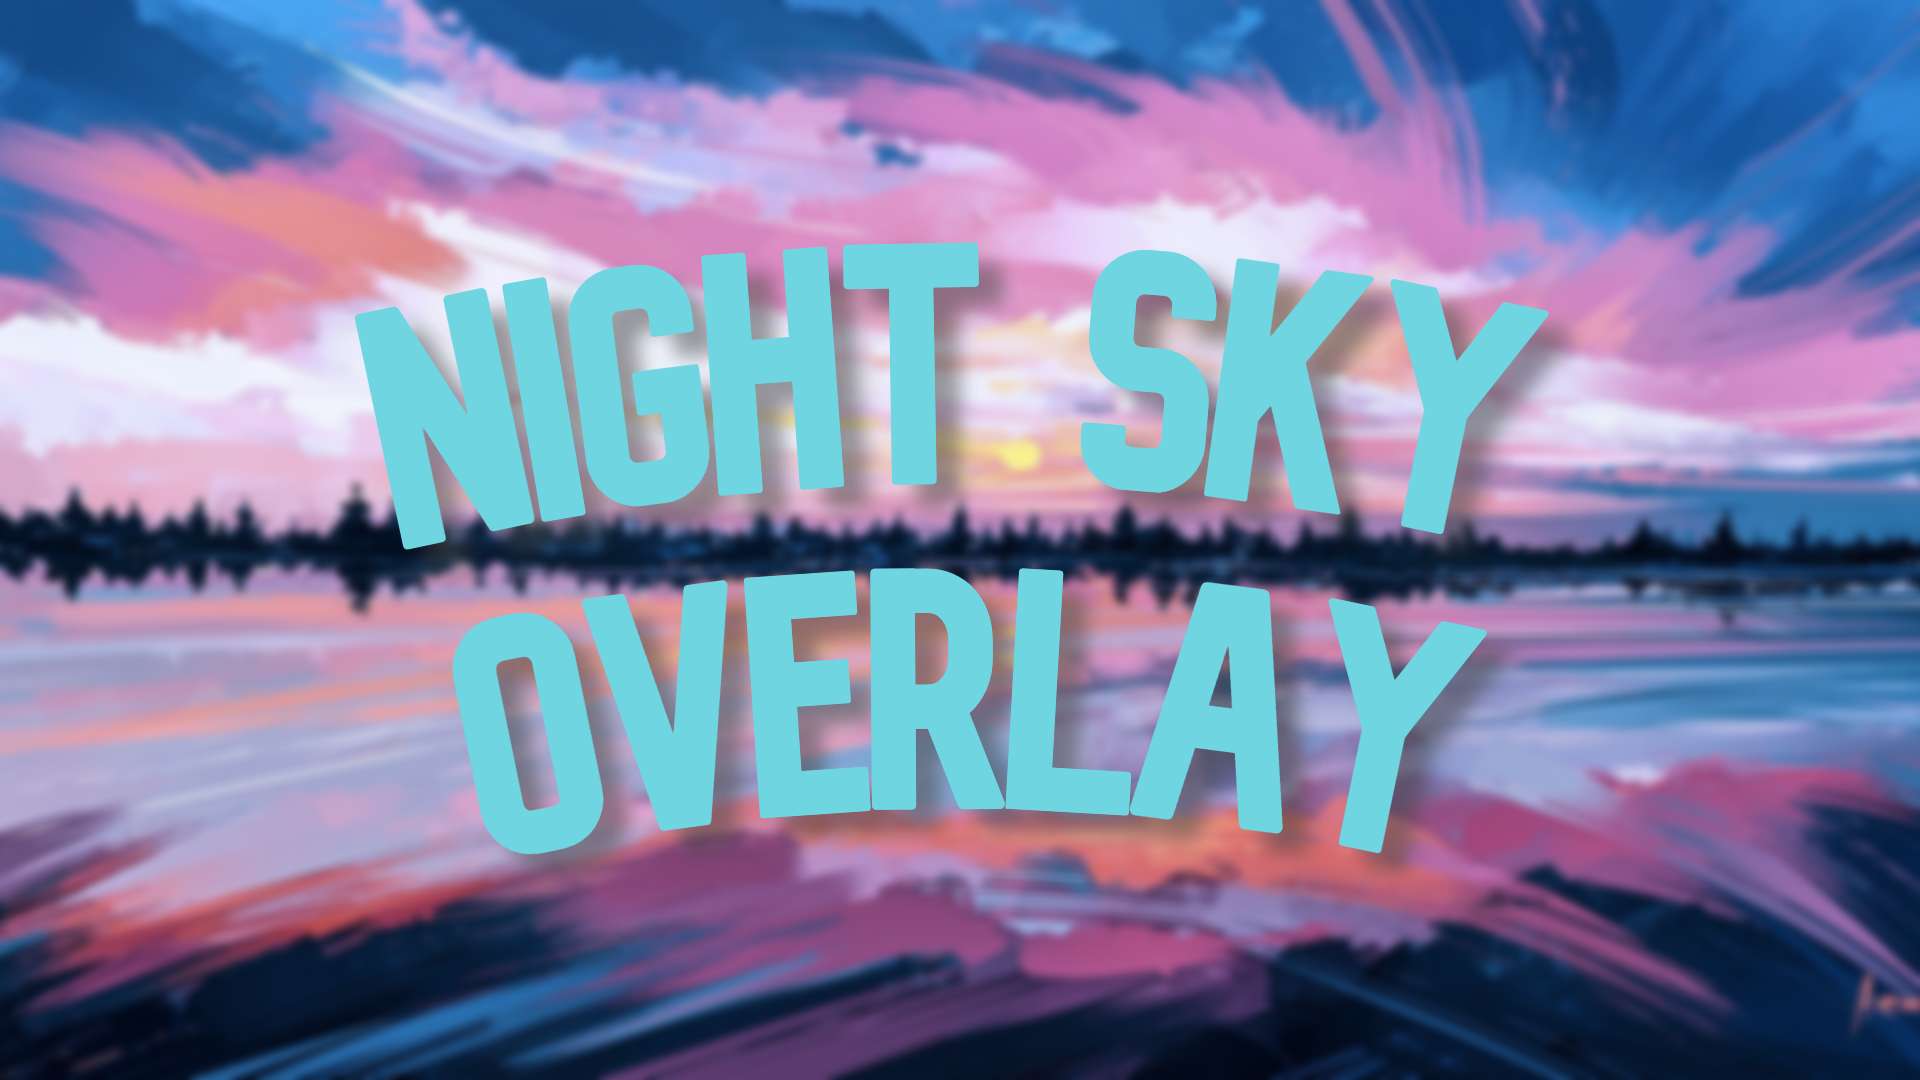 Night Sky Overlay #2 16 by rh56 on PvPRP